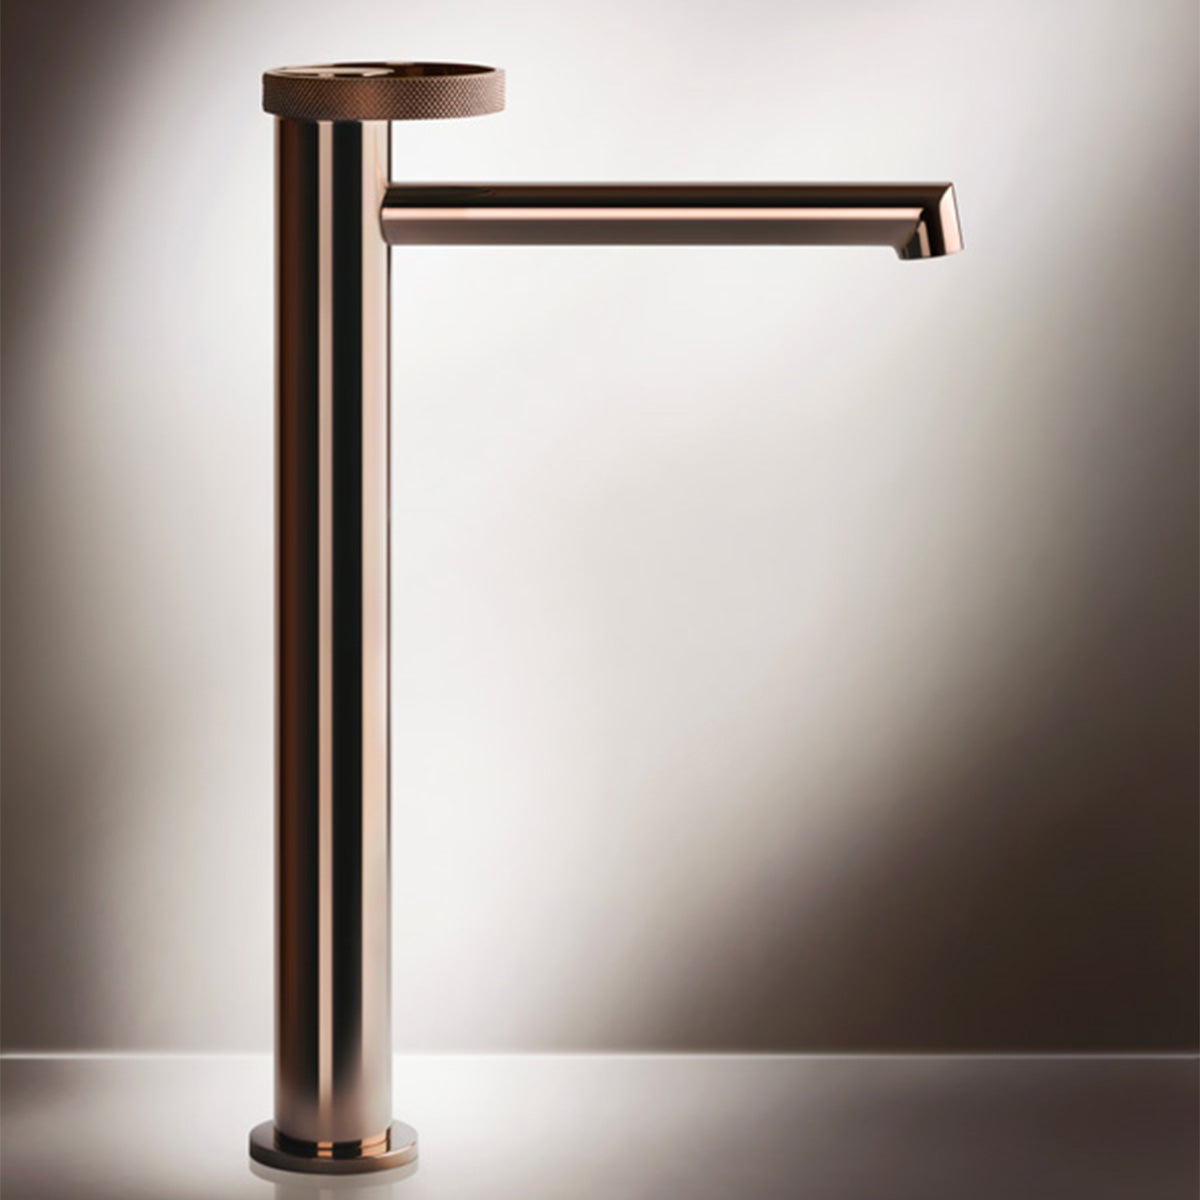 gessi anello tall basin mixer tap warm bronze feature